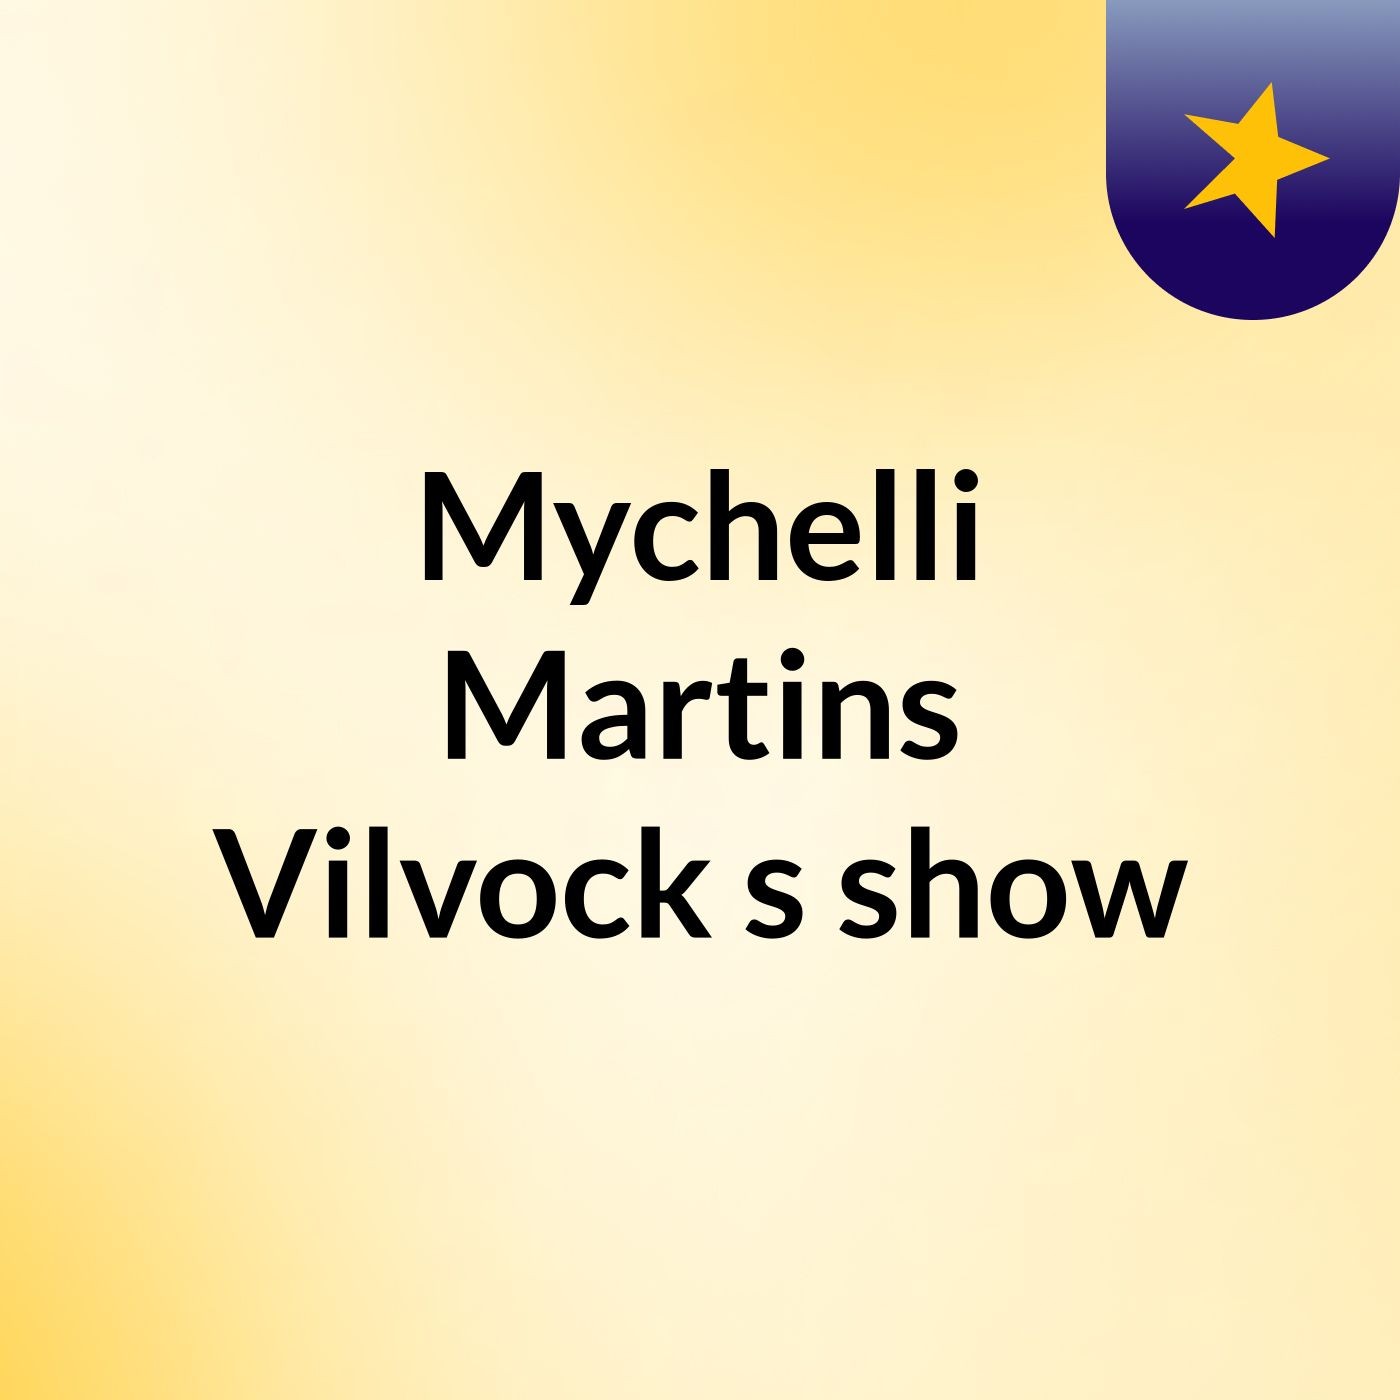 Mychelli Martins Vilvock's show